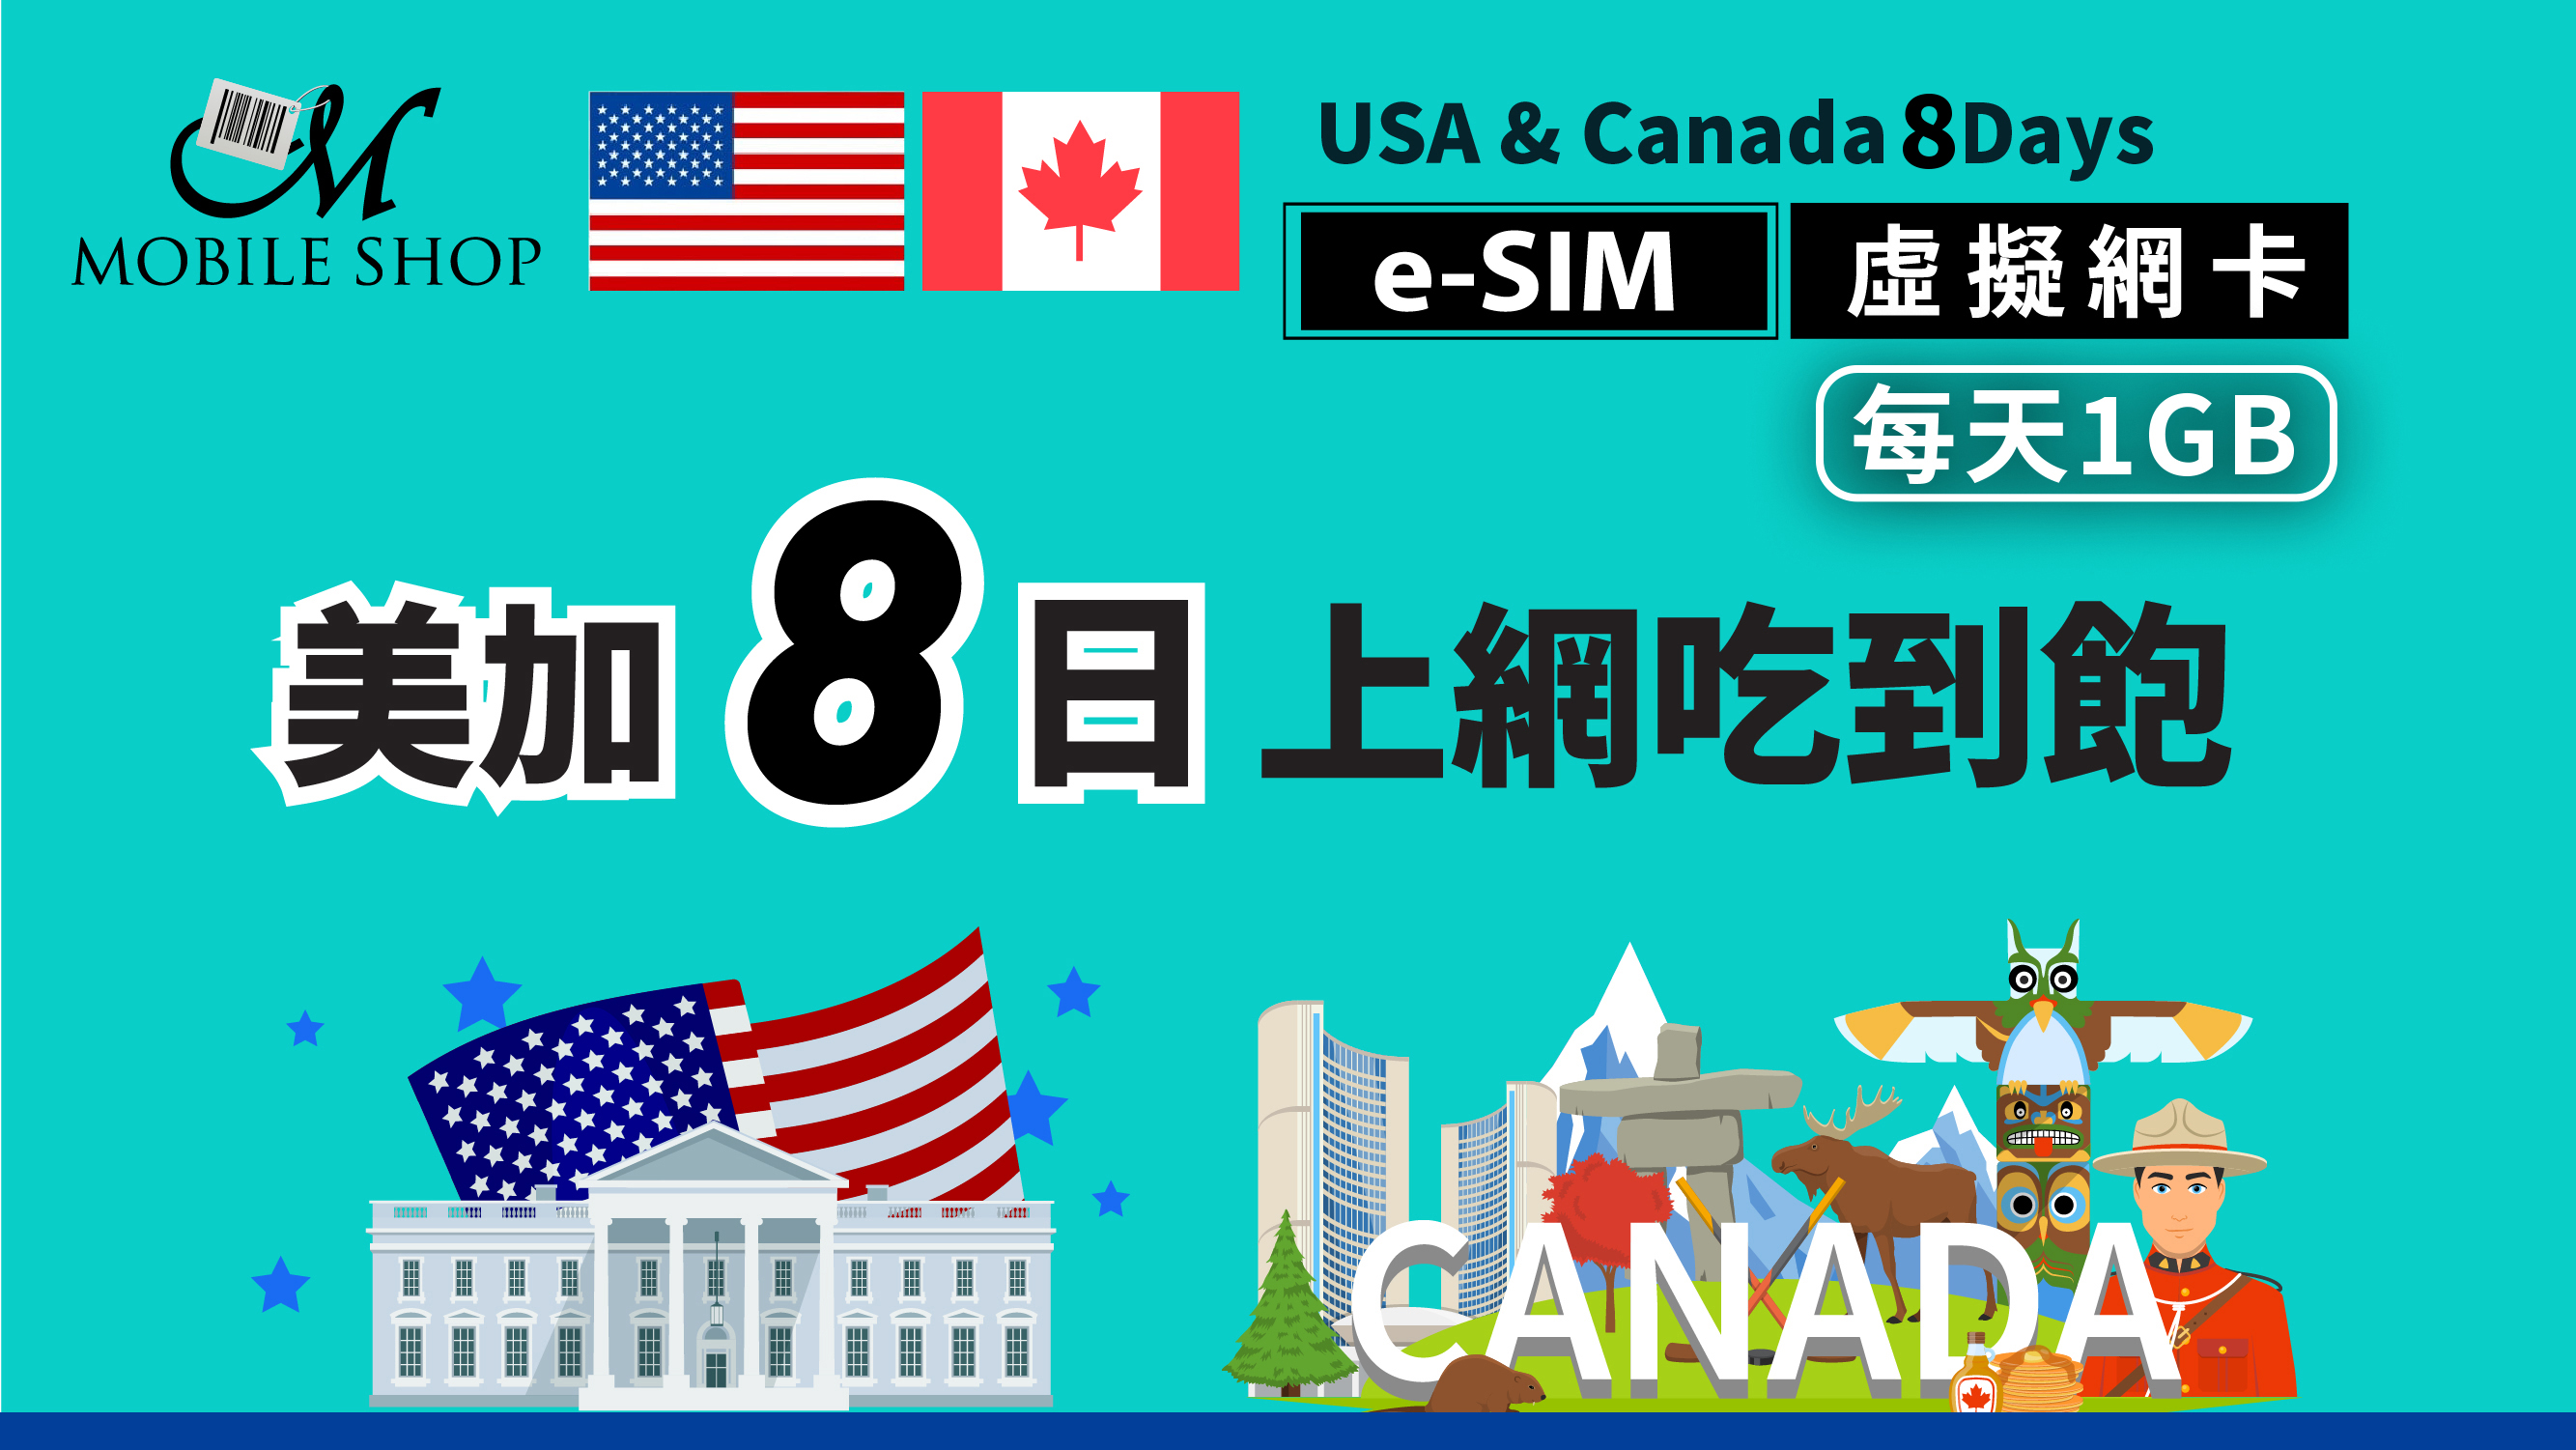 e-SIM_U.S./Canada 8 Days/1GB per day unlimited data